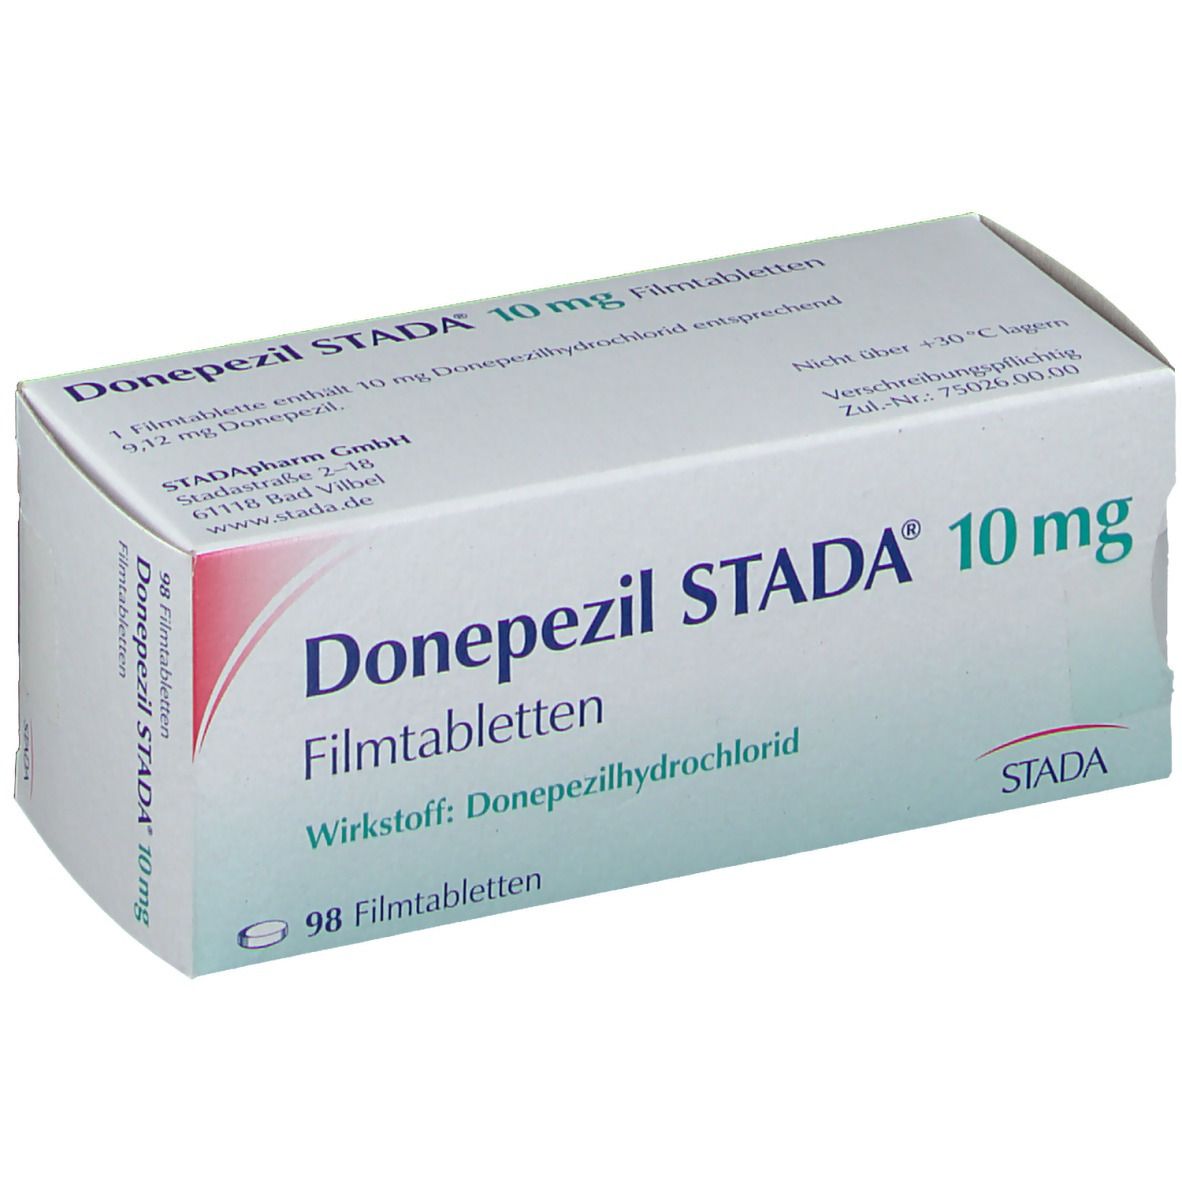 Donepezil STADA® 10 mg